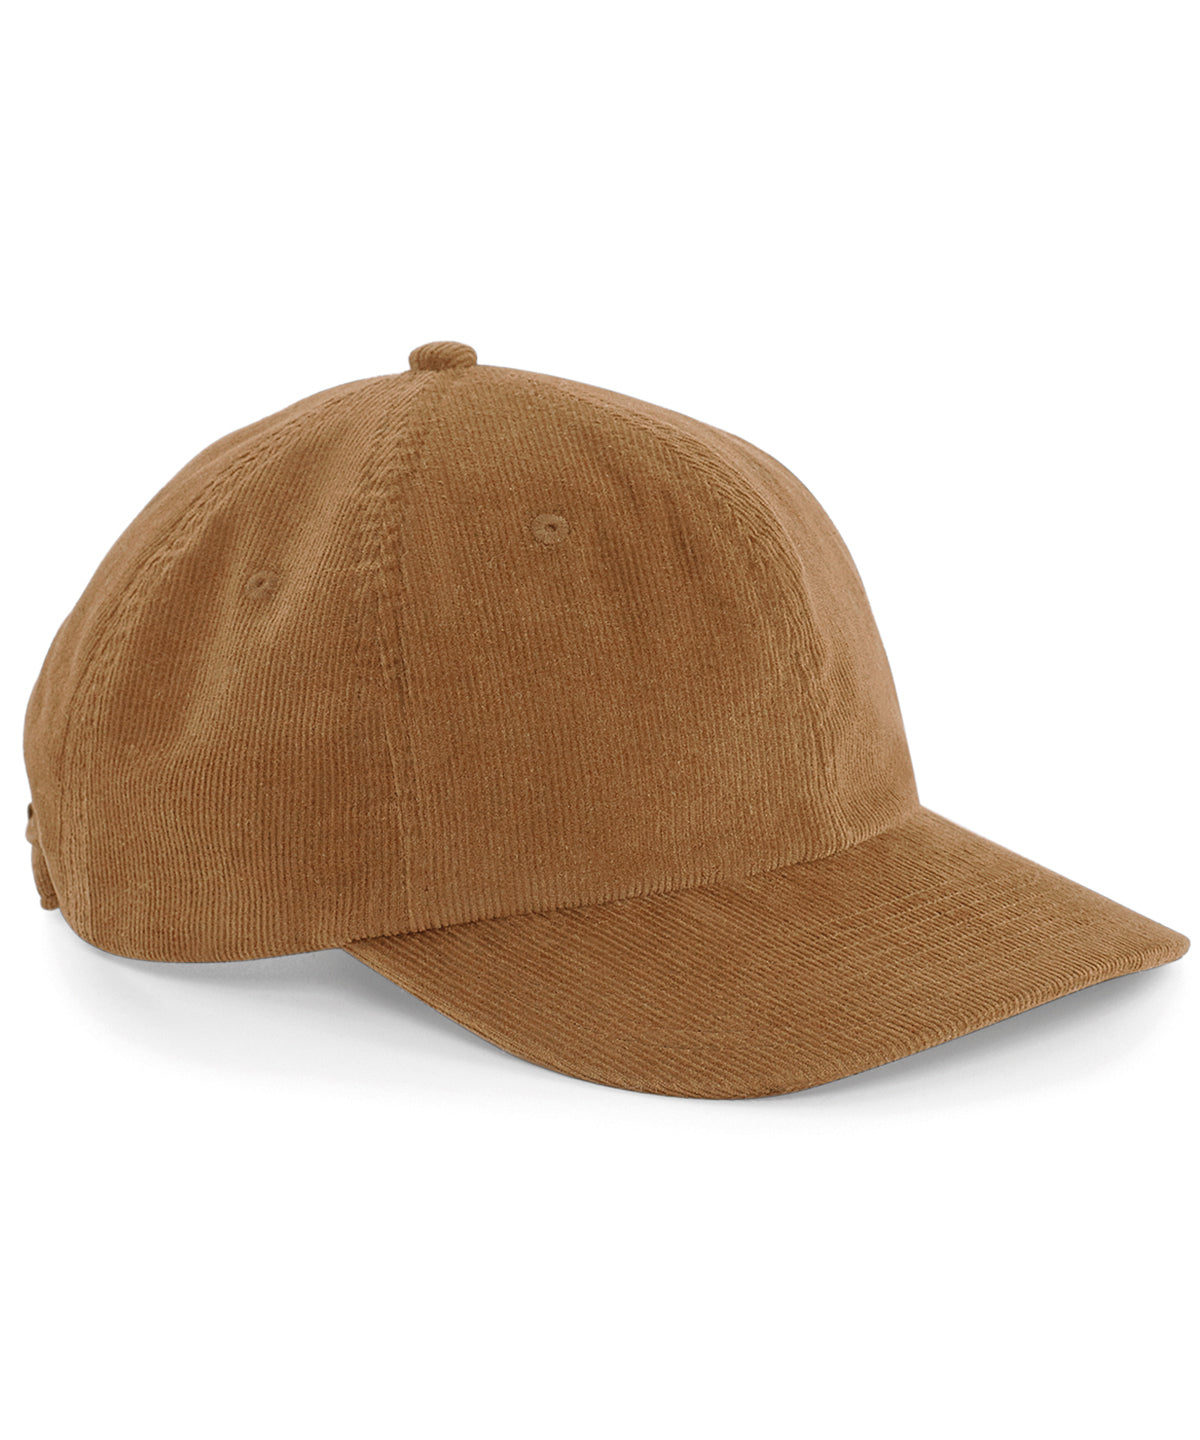 Personalised Caps - Mid Brown Beechfield Heritage cord cap